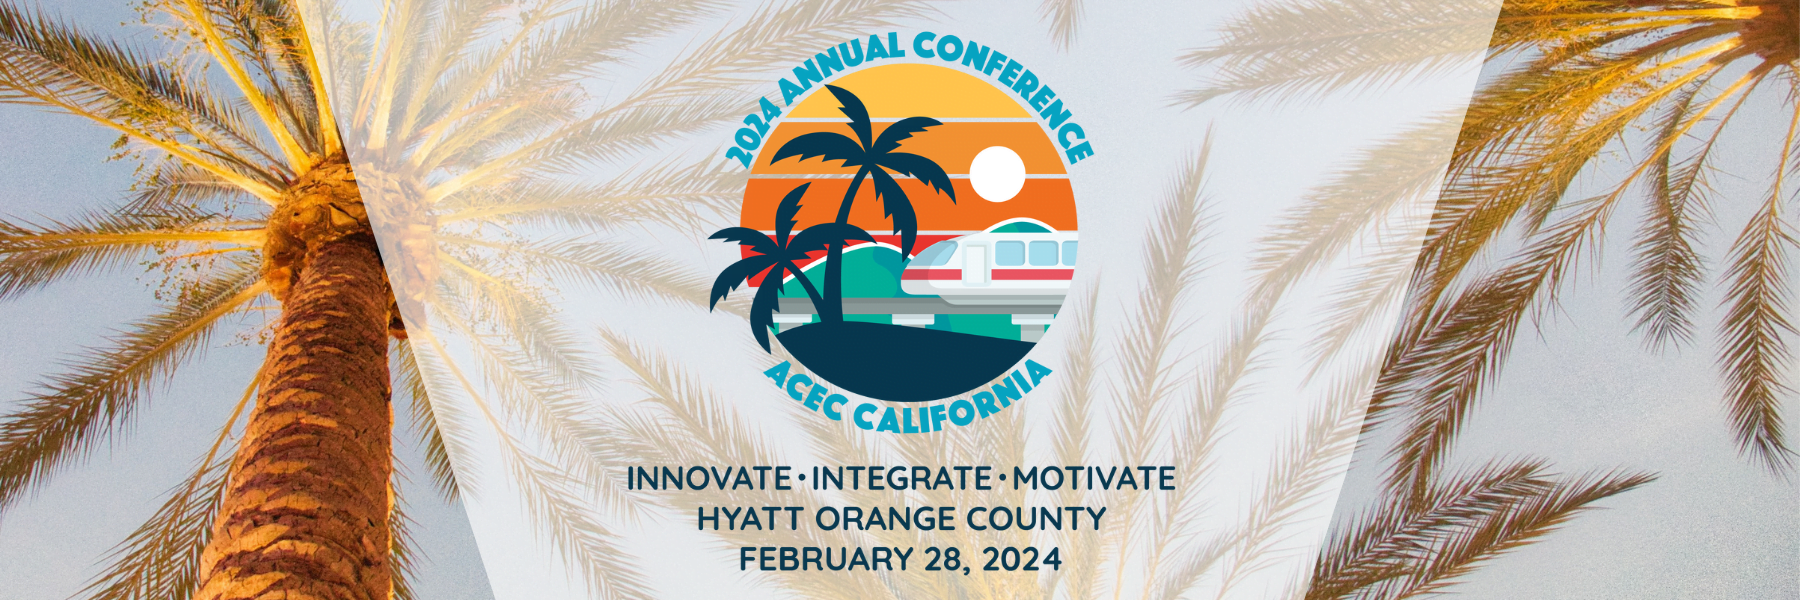 ACEC CA Annual Conference